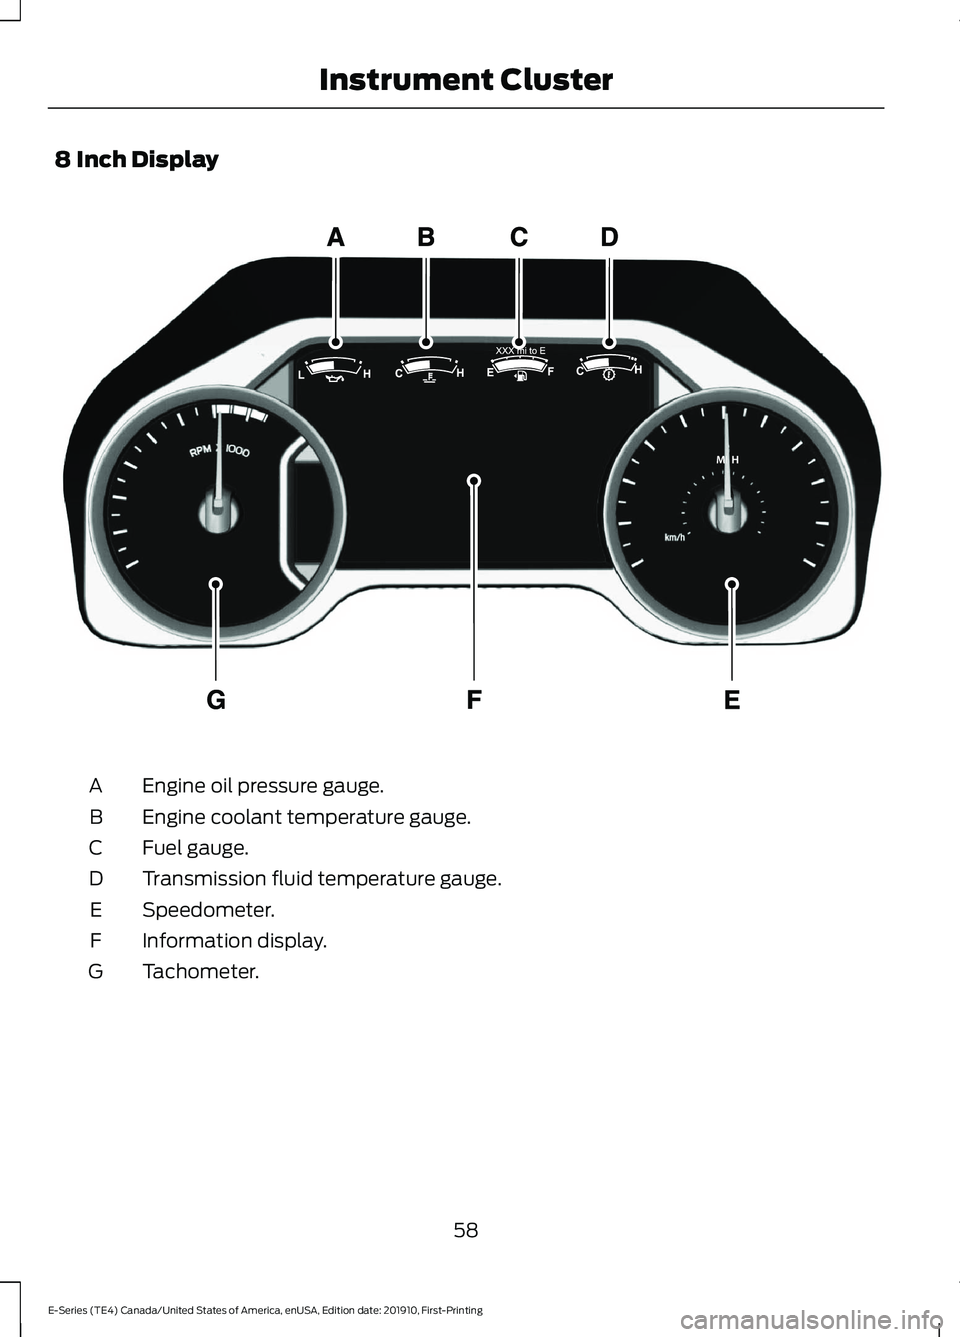 FORD E-450 2021  Owners Manual 8 Inch Display
Engine oil pressure gauge.
A
Engine coolant temperature gauge.
B
Fuel gauge.
C
Transmission fluid temperature gauge.
D
Speedometer.
E
Information display.
F
Tachometer.
G
58
E-Series (T